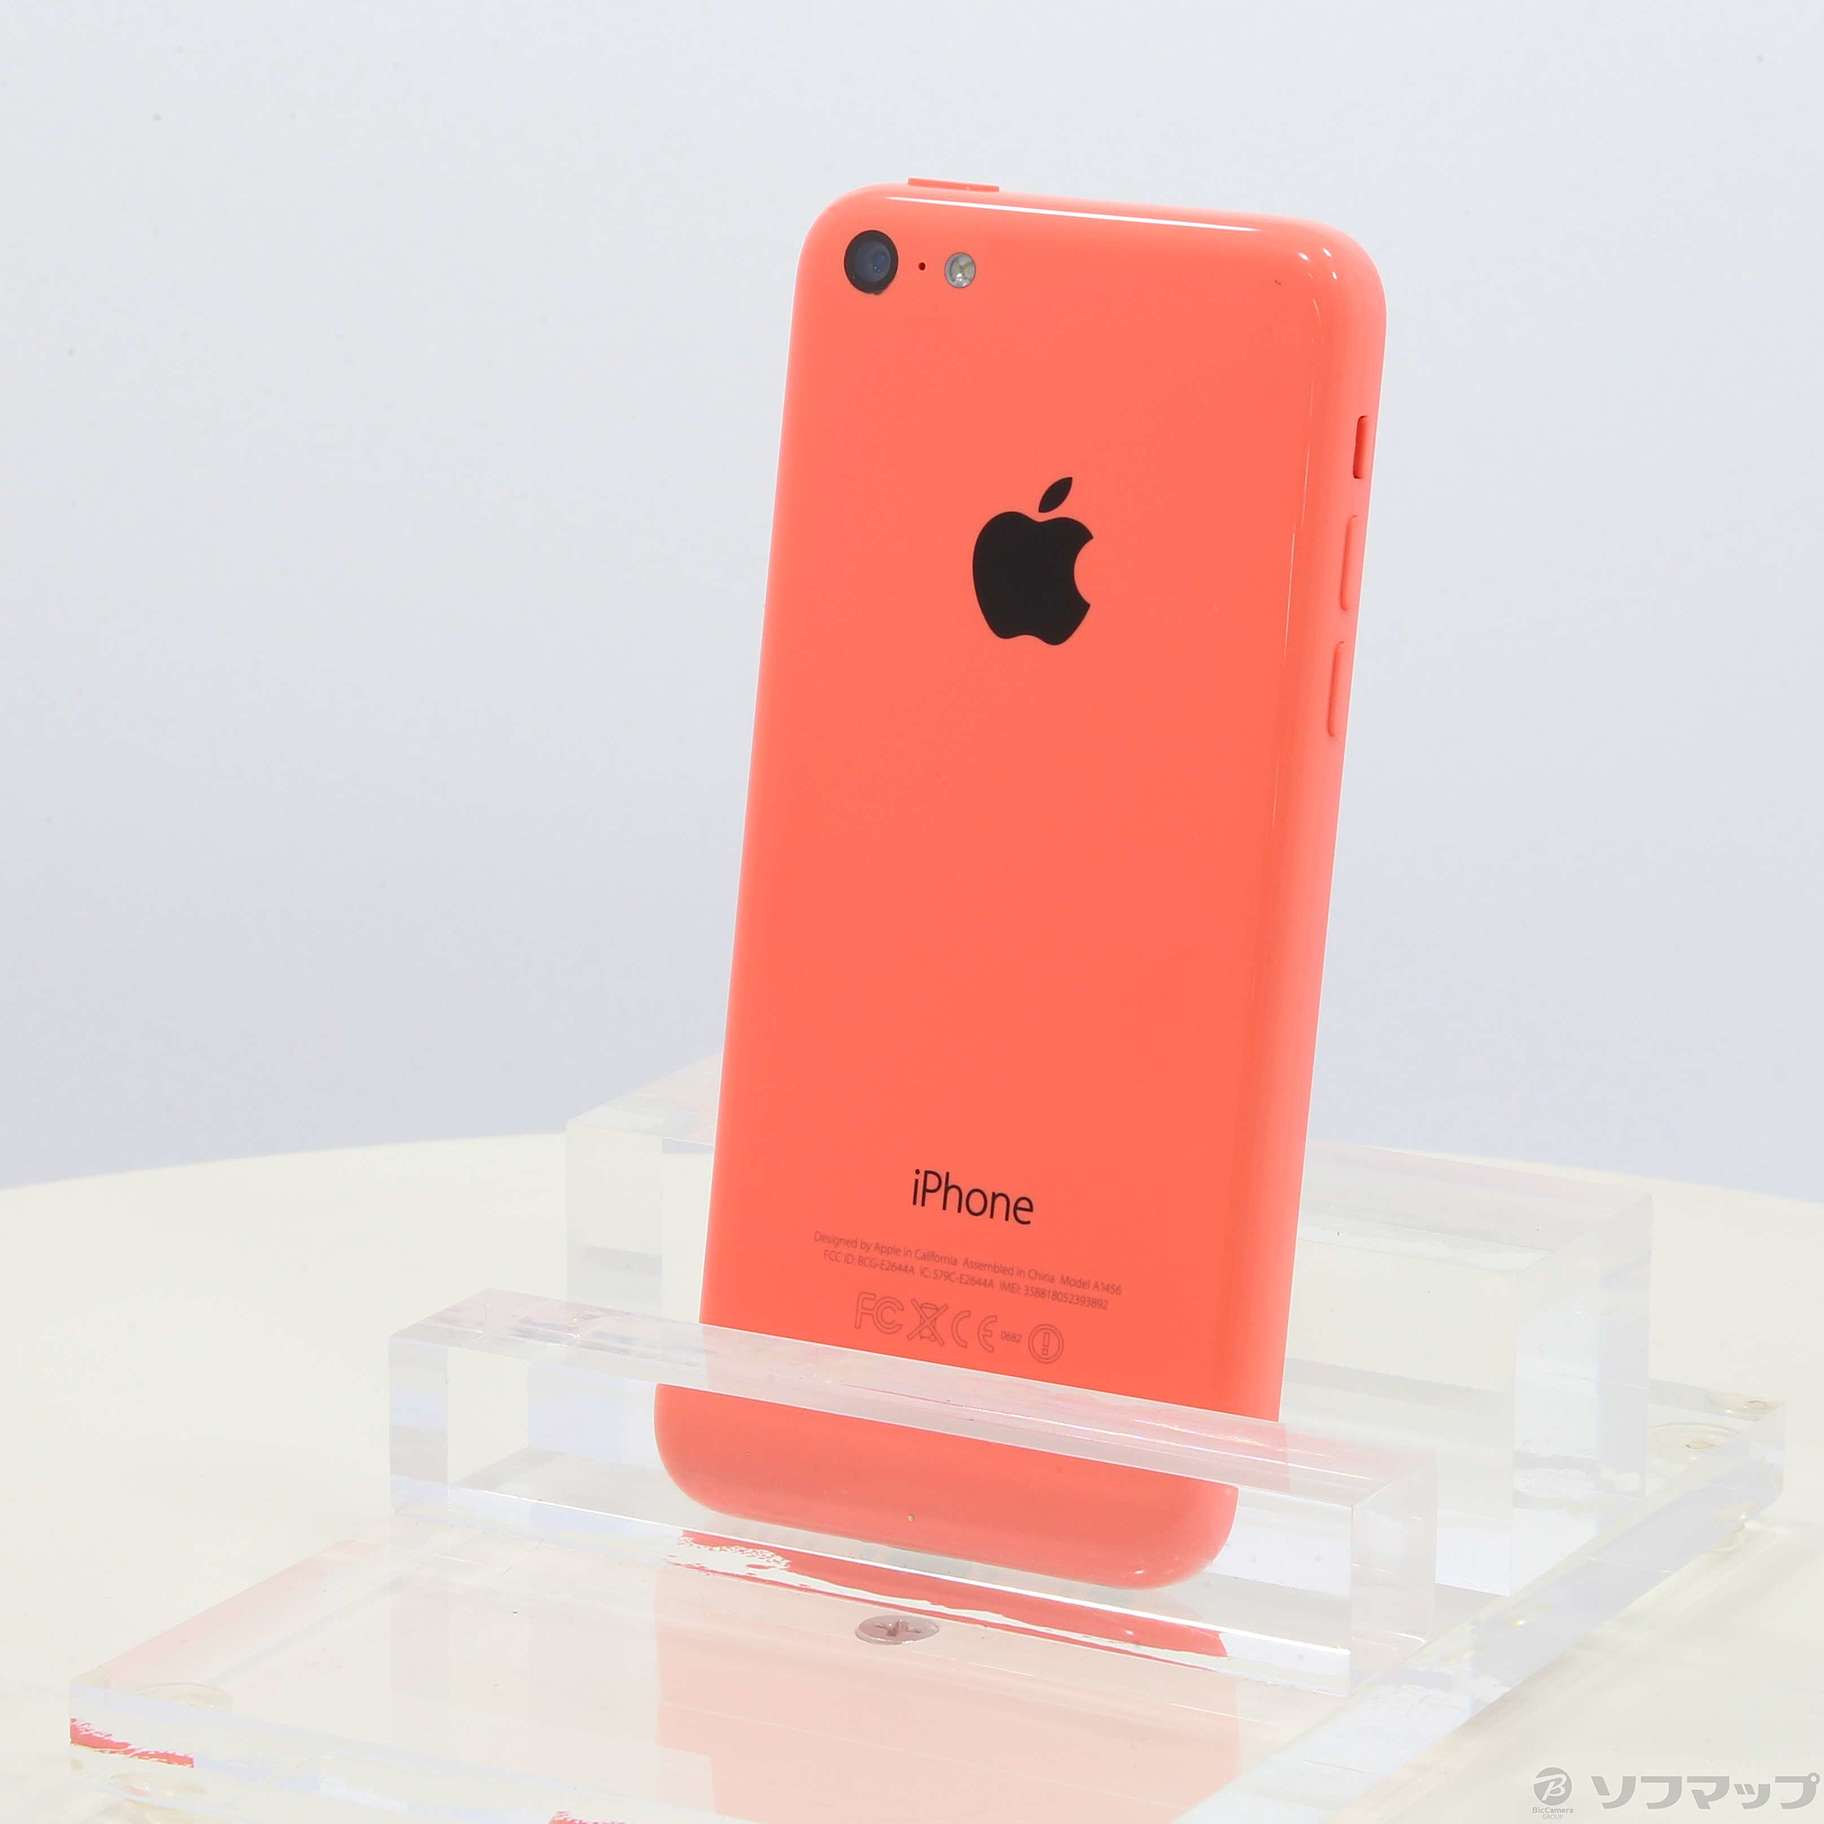 iPhone 5c Pink 32 GB Softbank